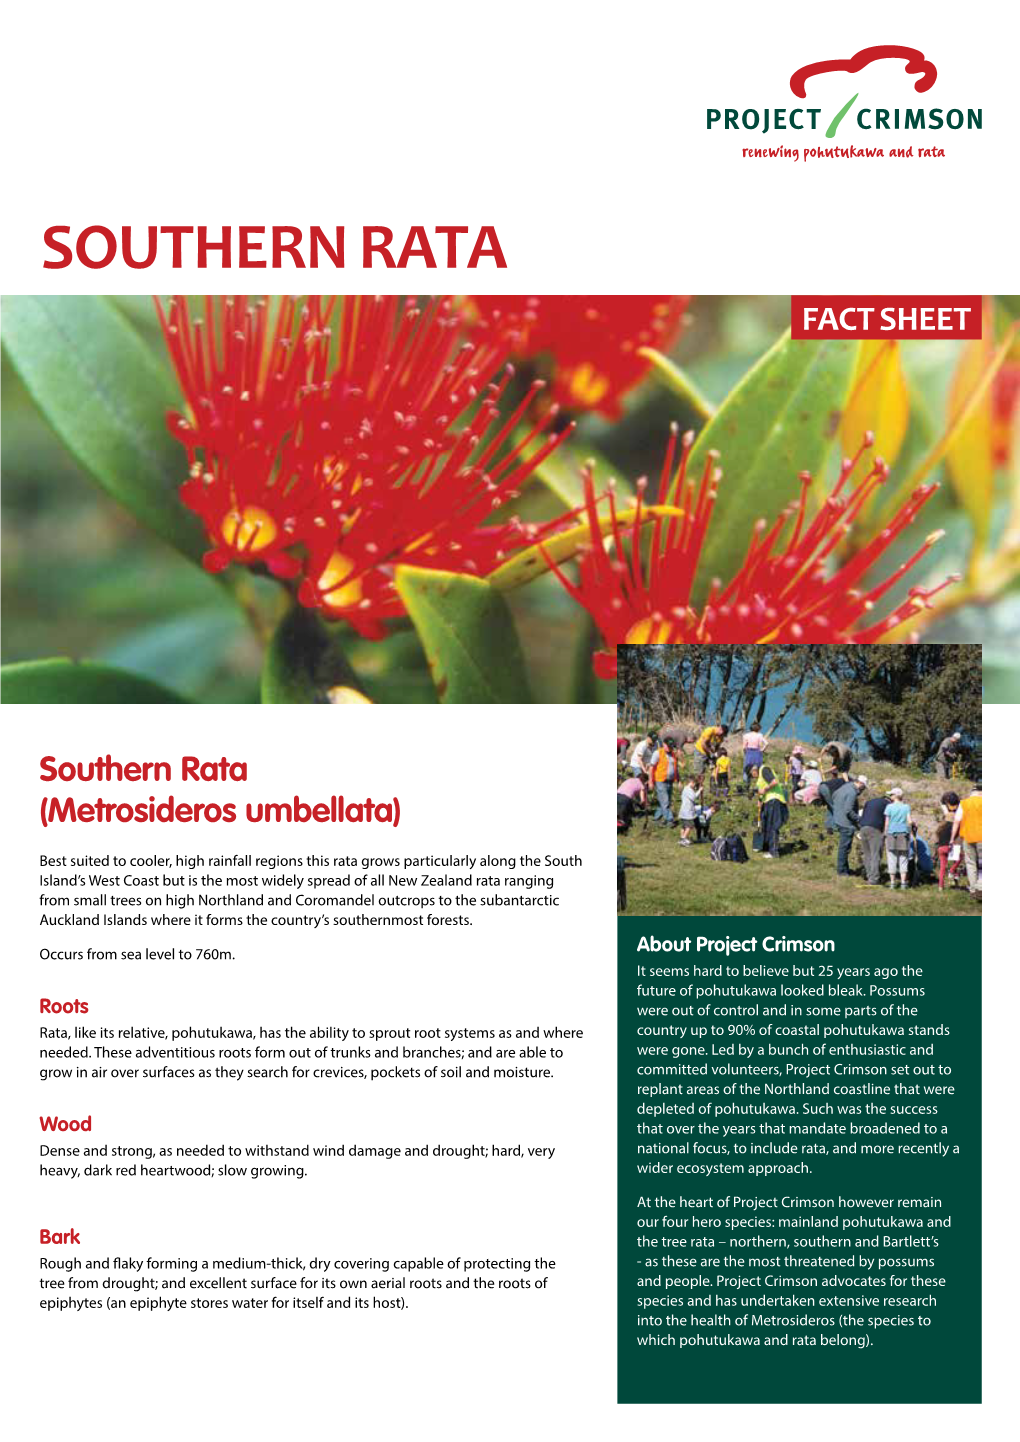 Southern Rata Fact Sheet